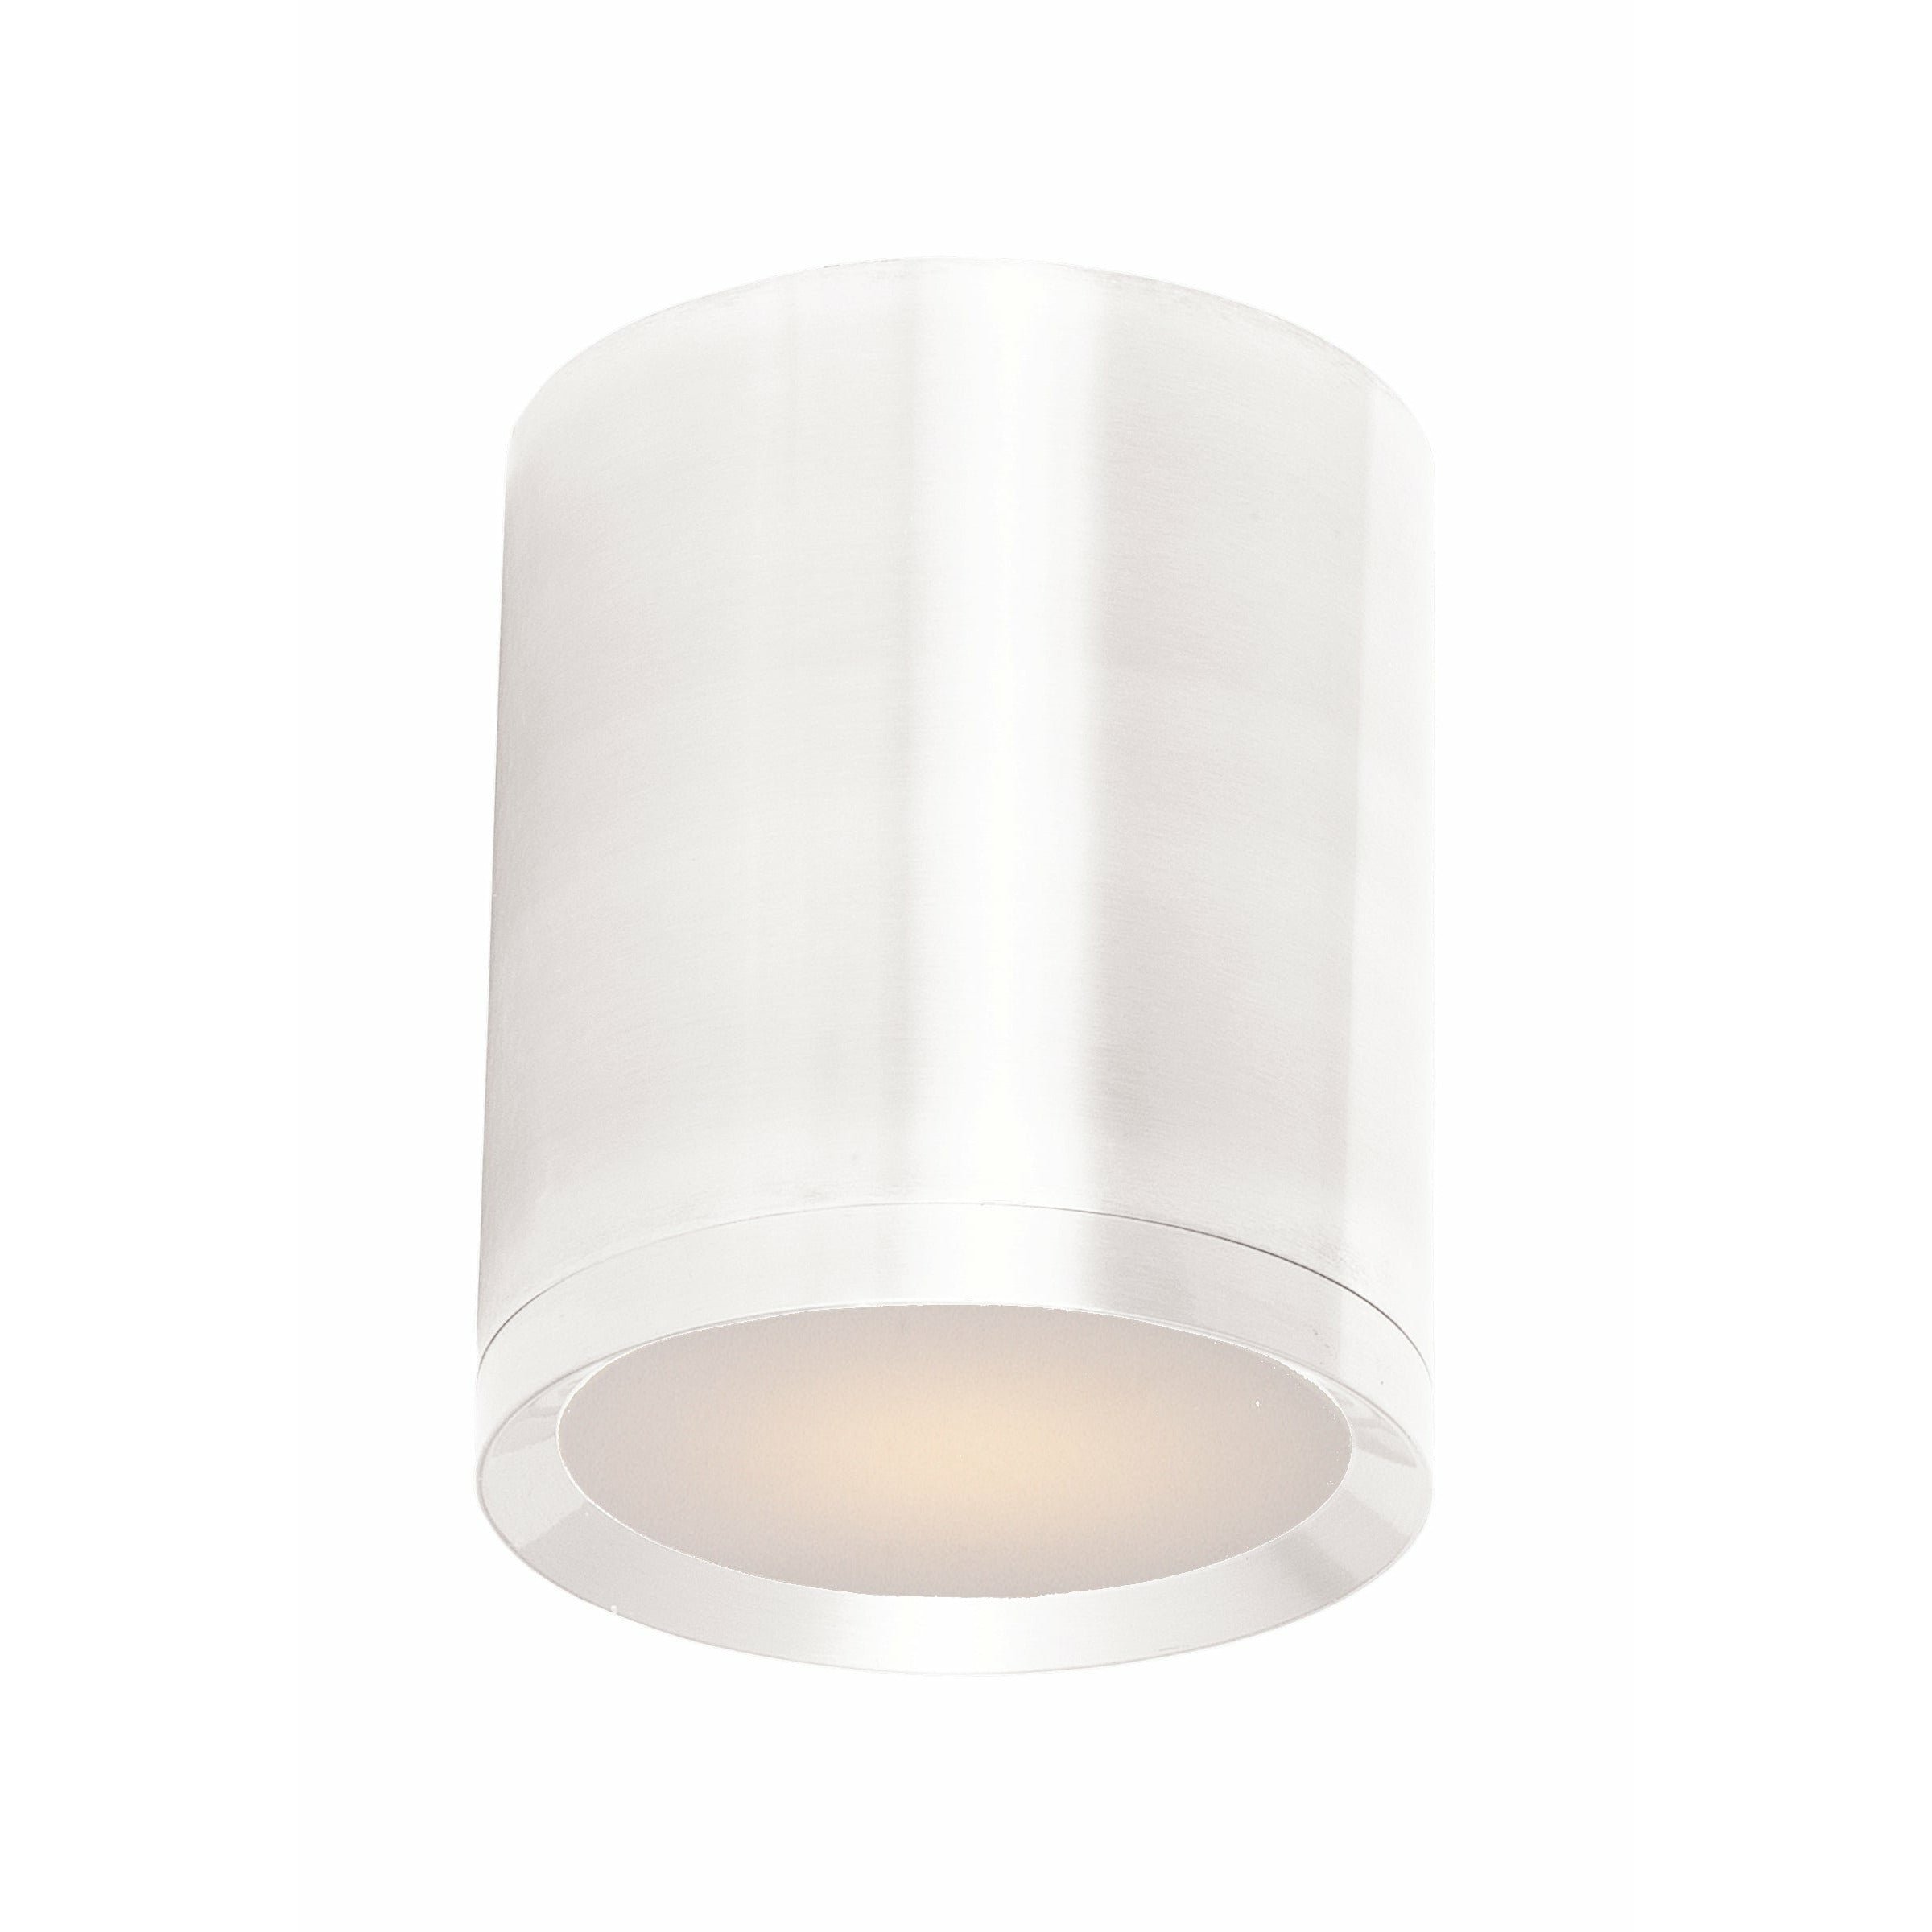 Lightray LED 1-Light Outdoor Ceiling Light